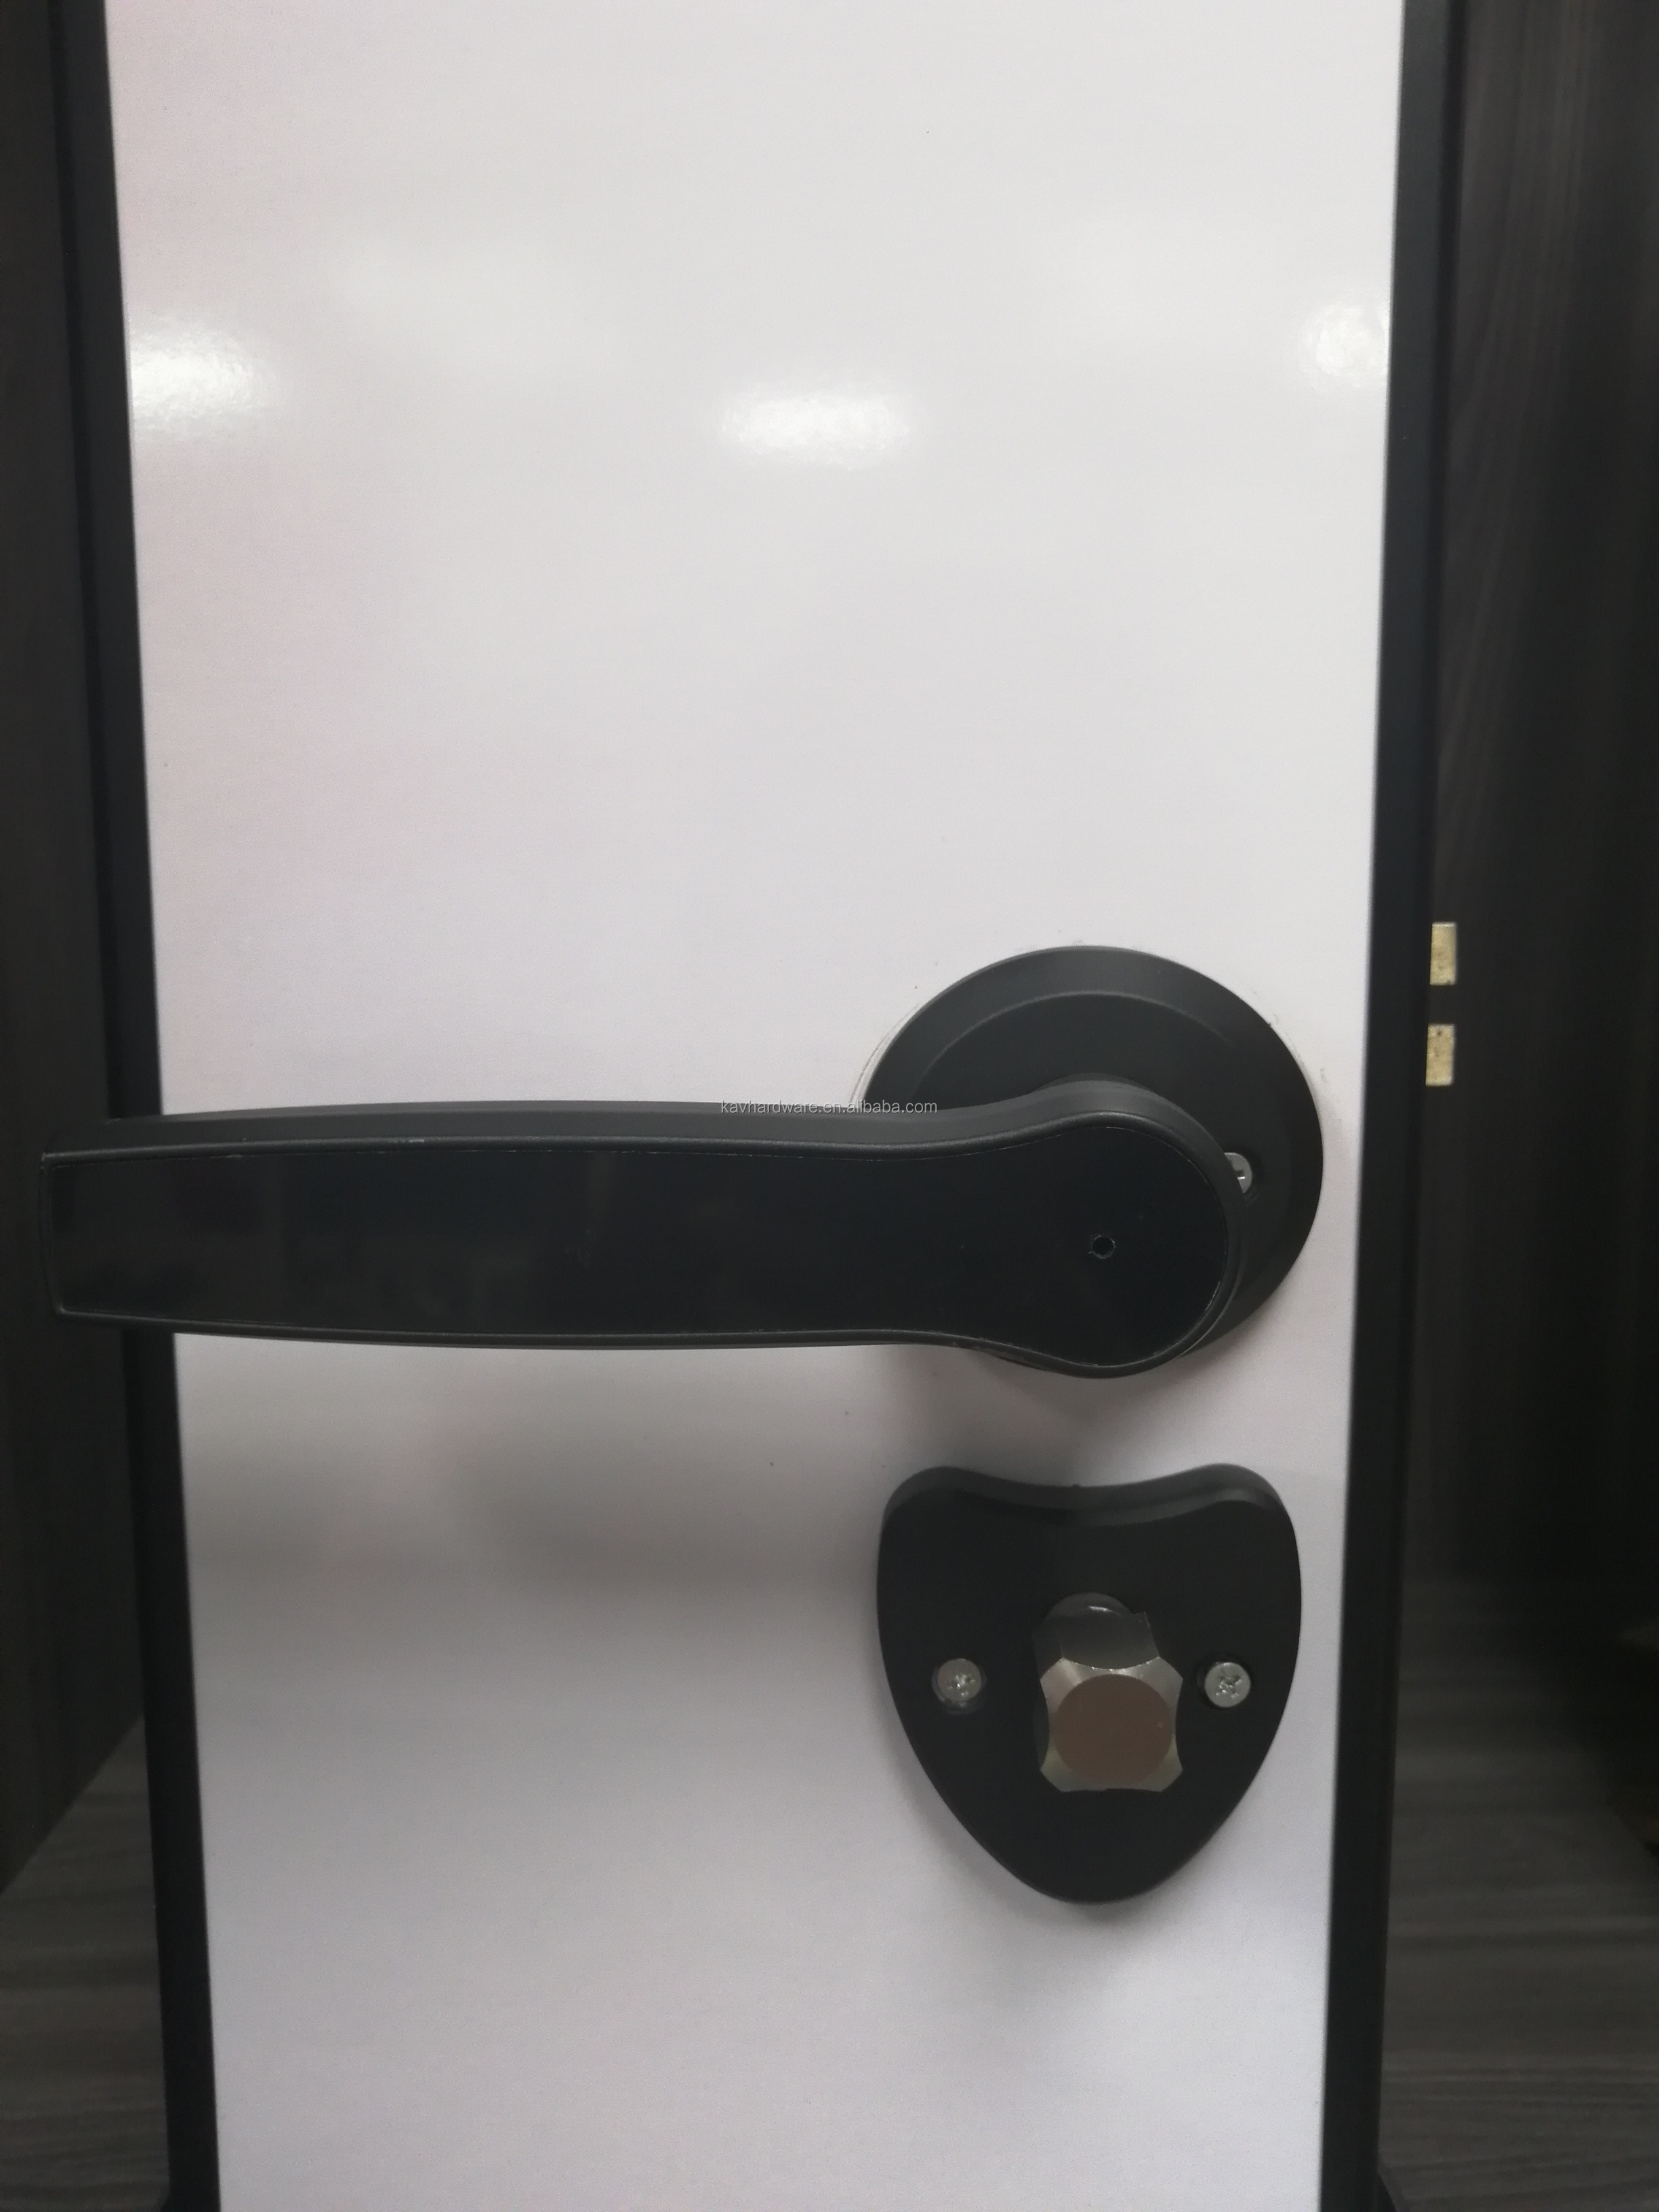 kav furniture door Intelligent fingerprint lock with lithium battery power supply with digital and fingerprint password (AX104)